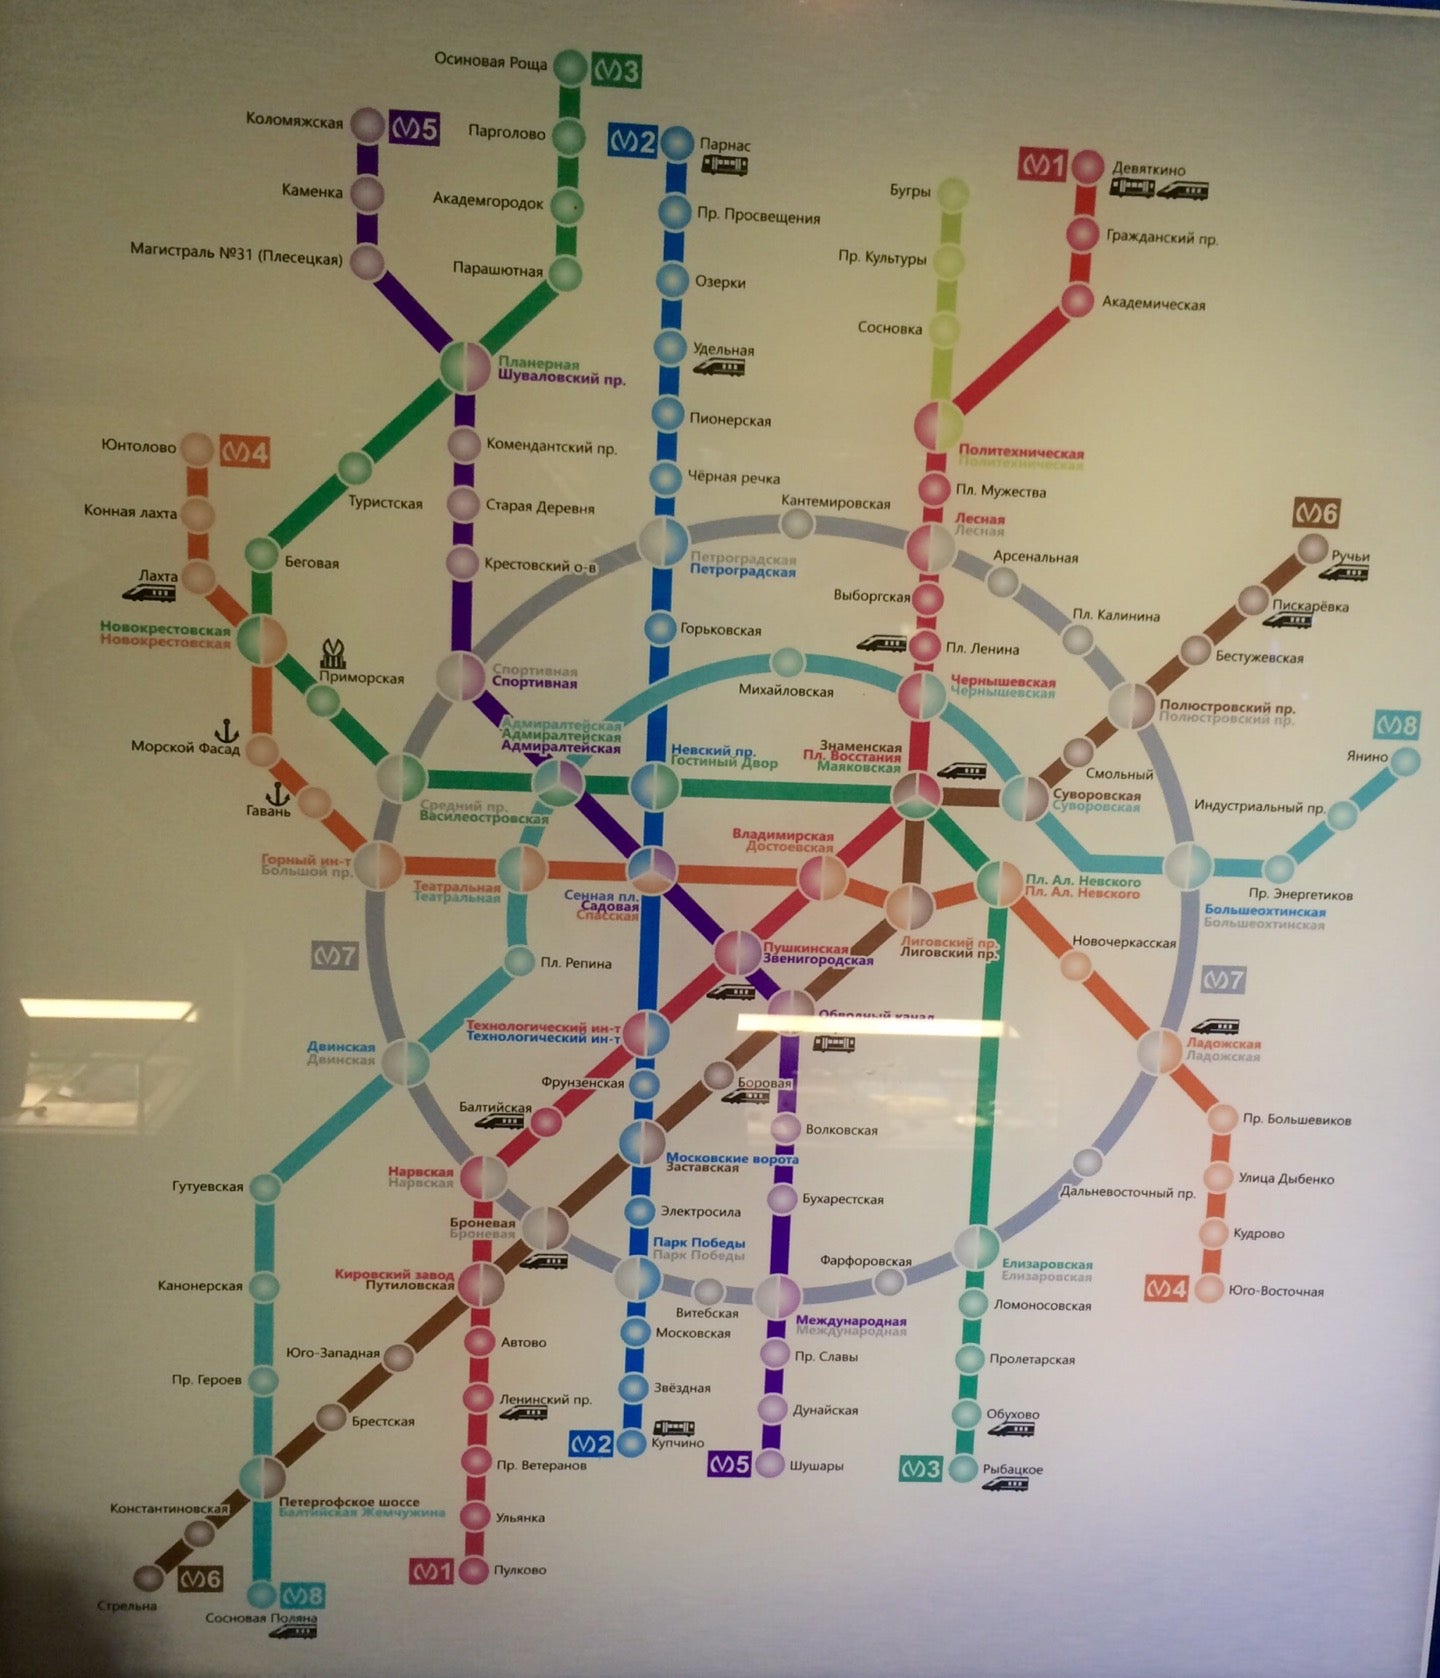 метро санкт петербурга схема новая 2022 года